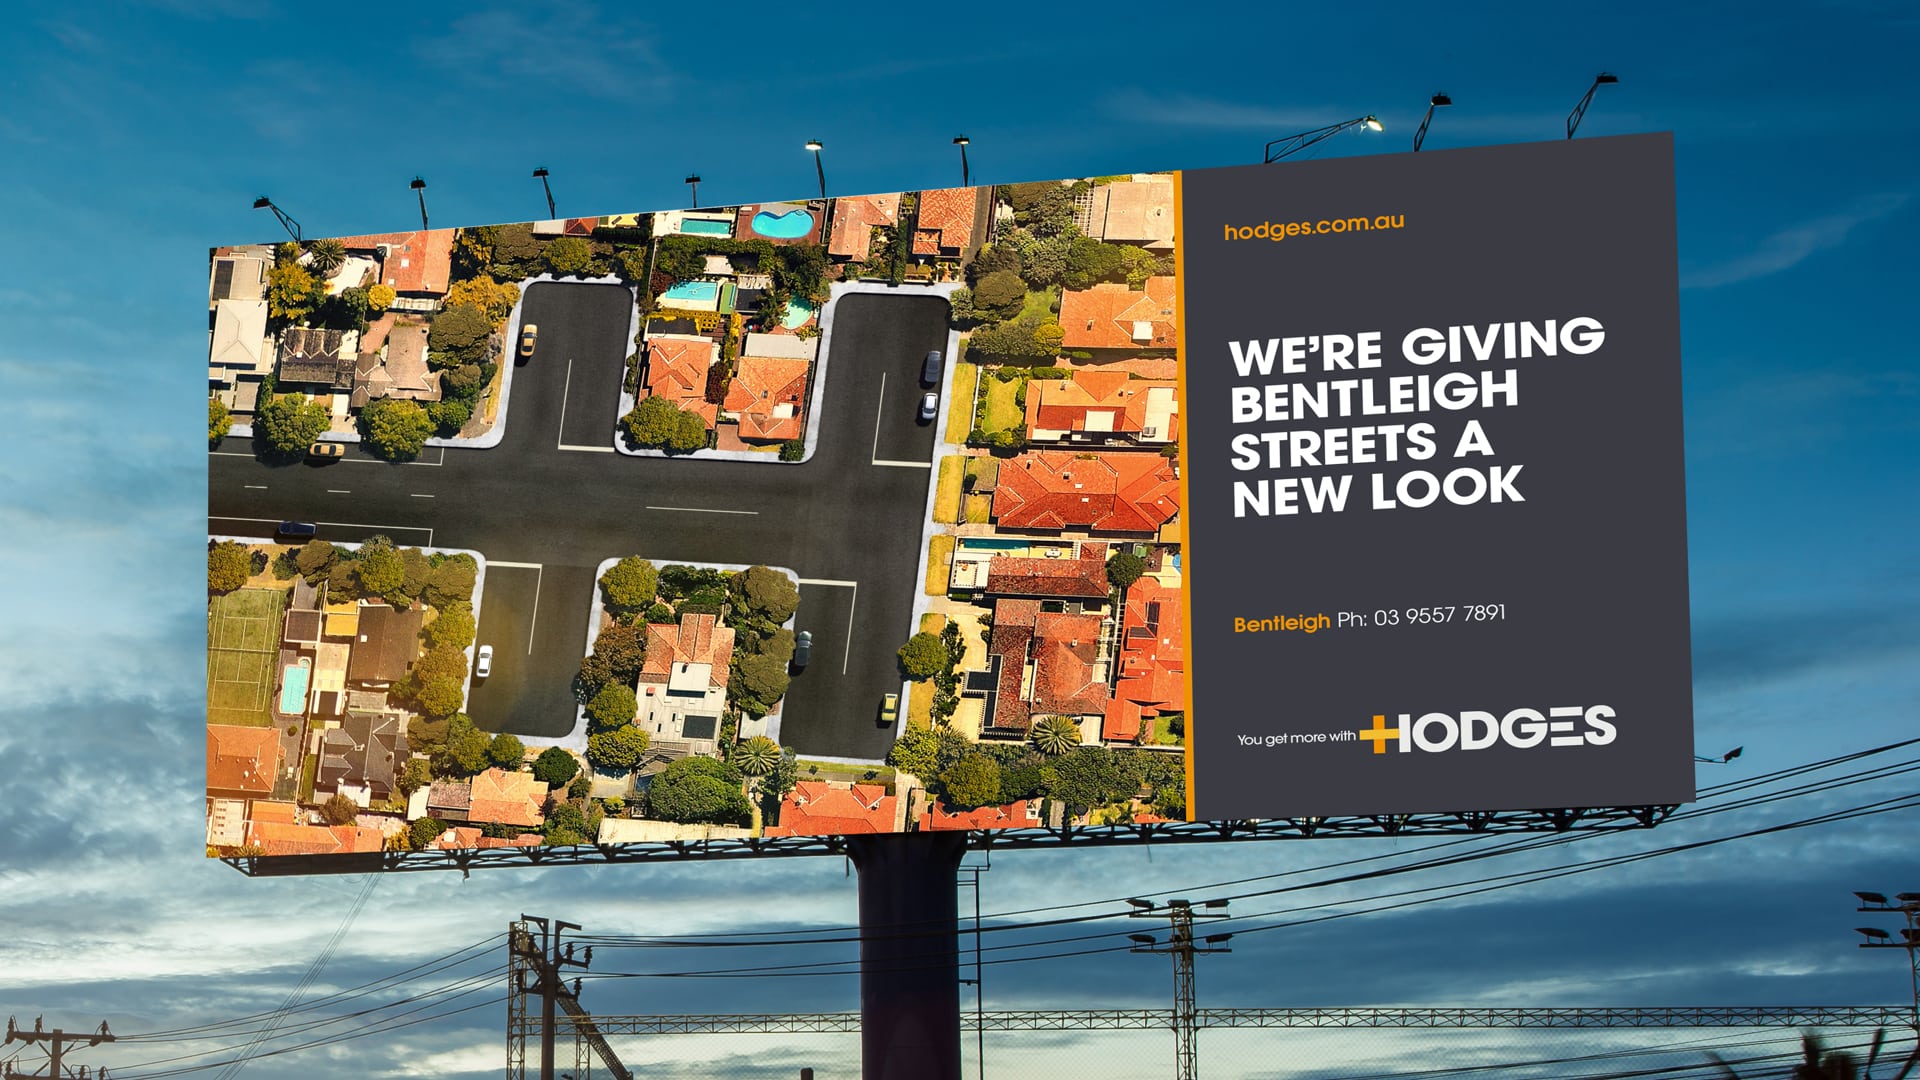 hodges-billboard